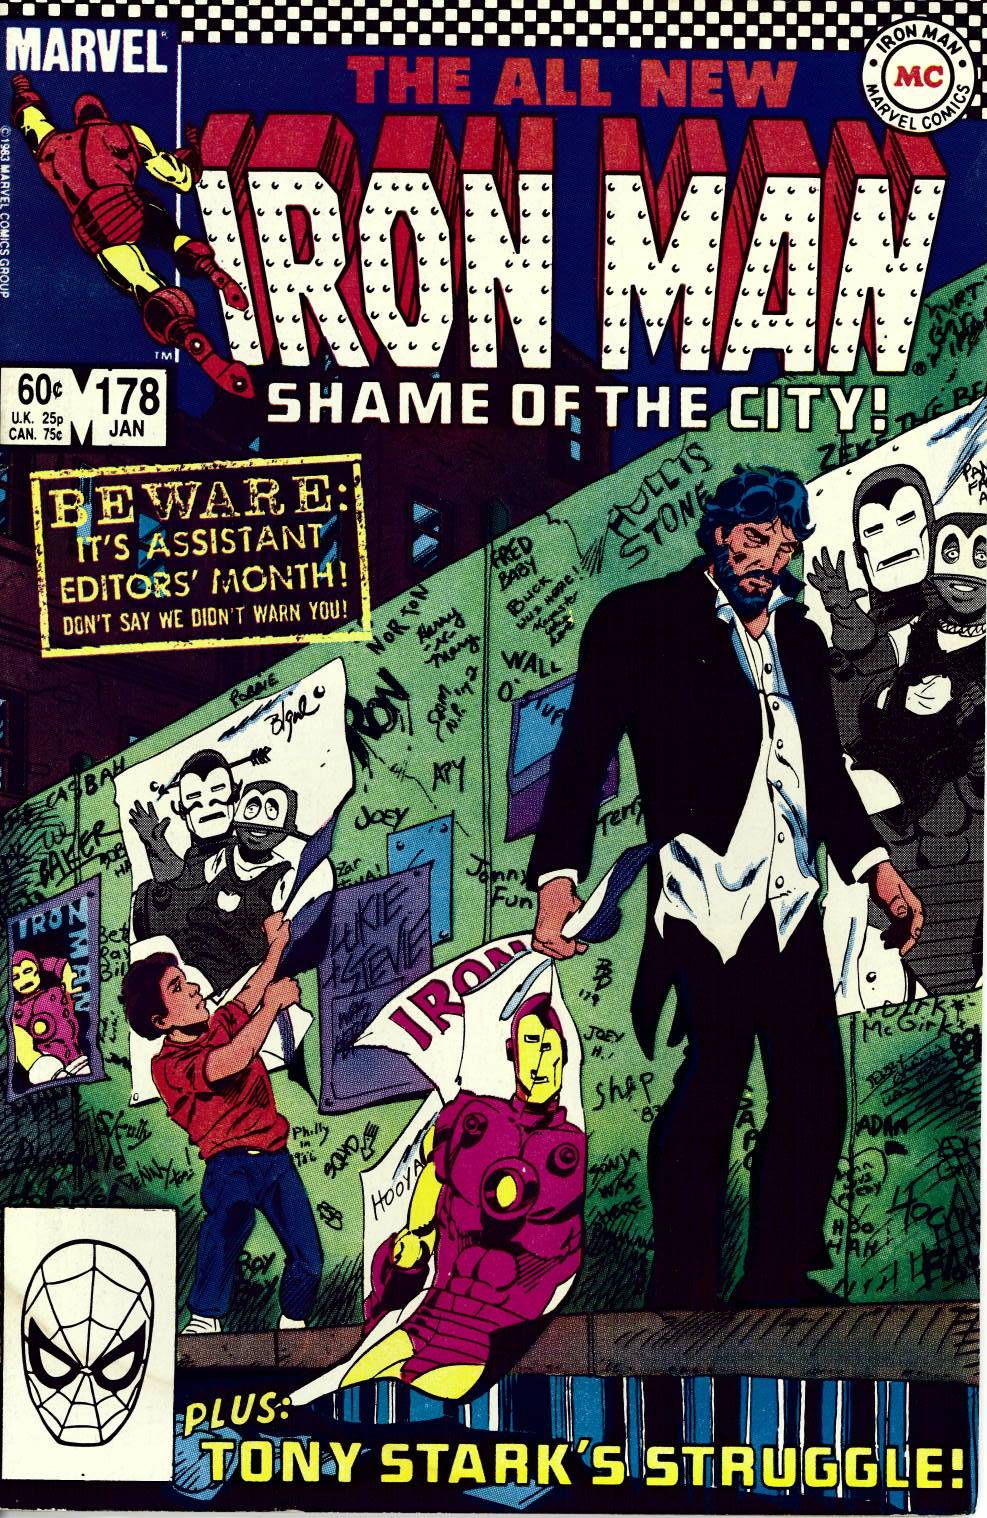 Iron Man Graffiti Wallpaper